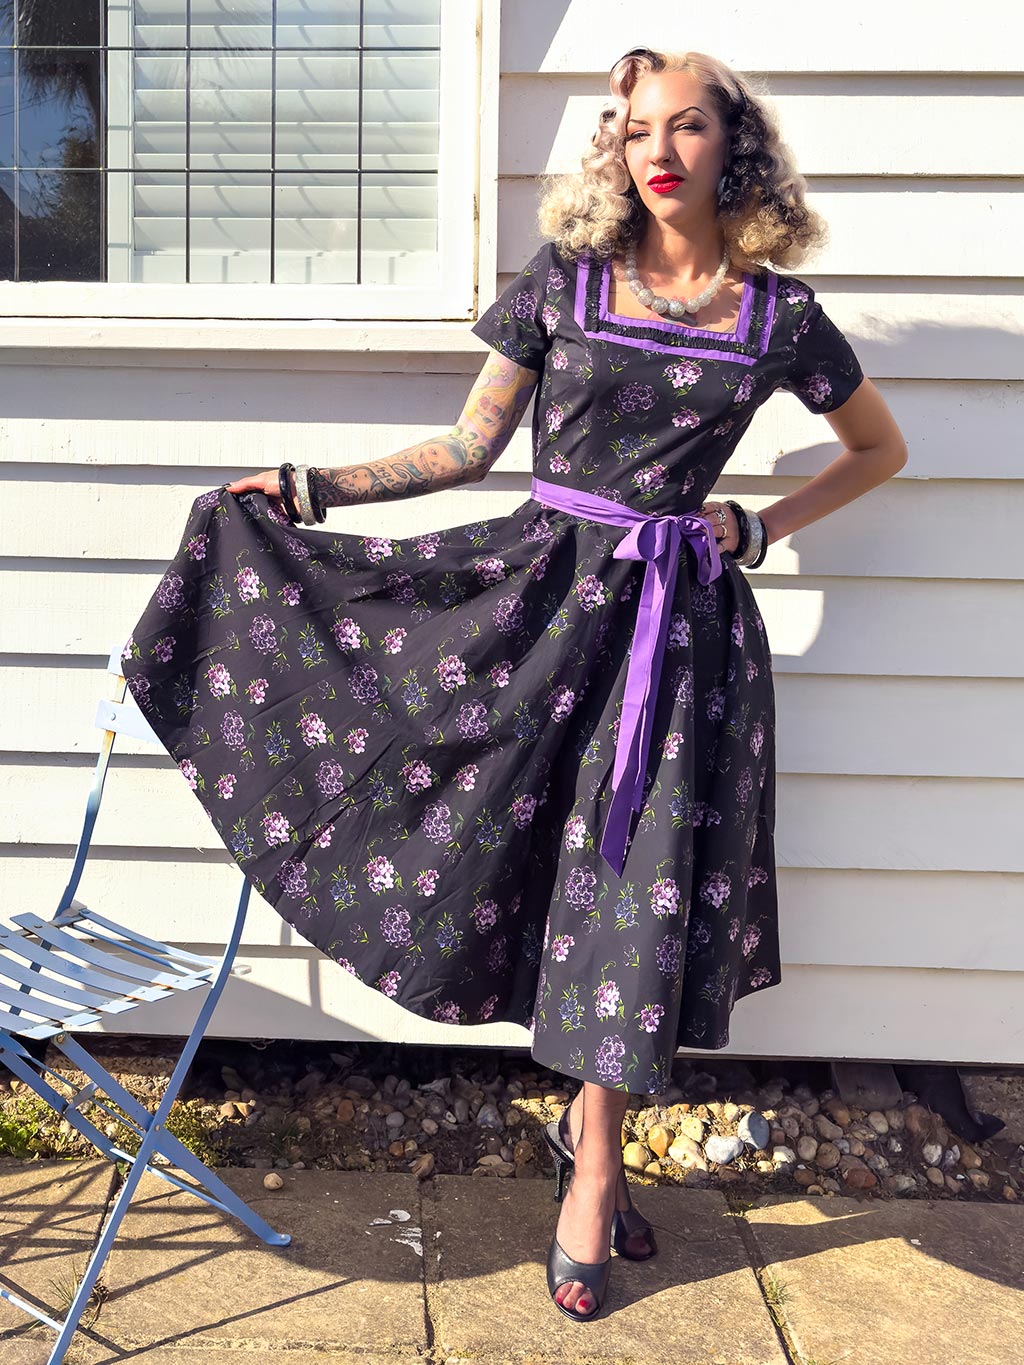 Fities 50's Cotton Sundress Full Skirt Straps Pockets Floral Built